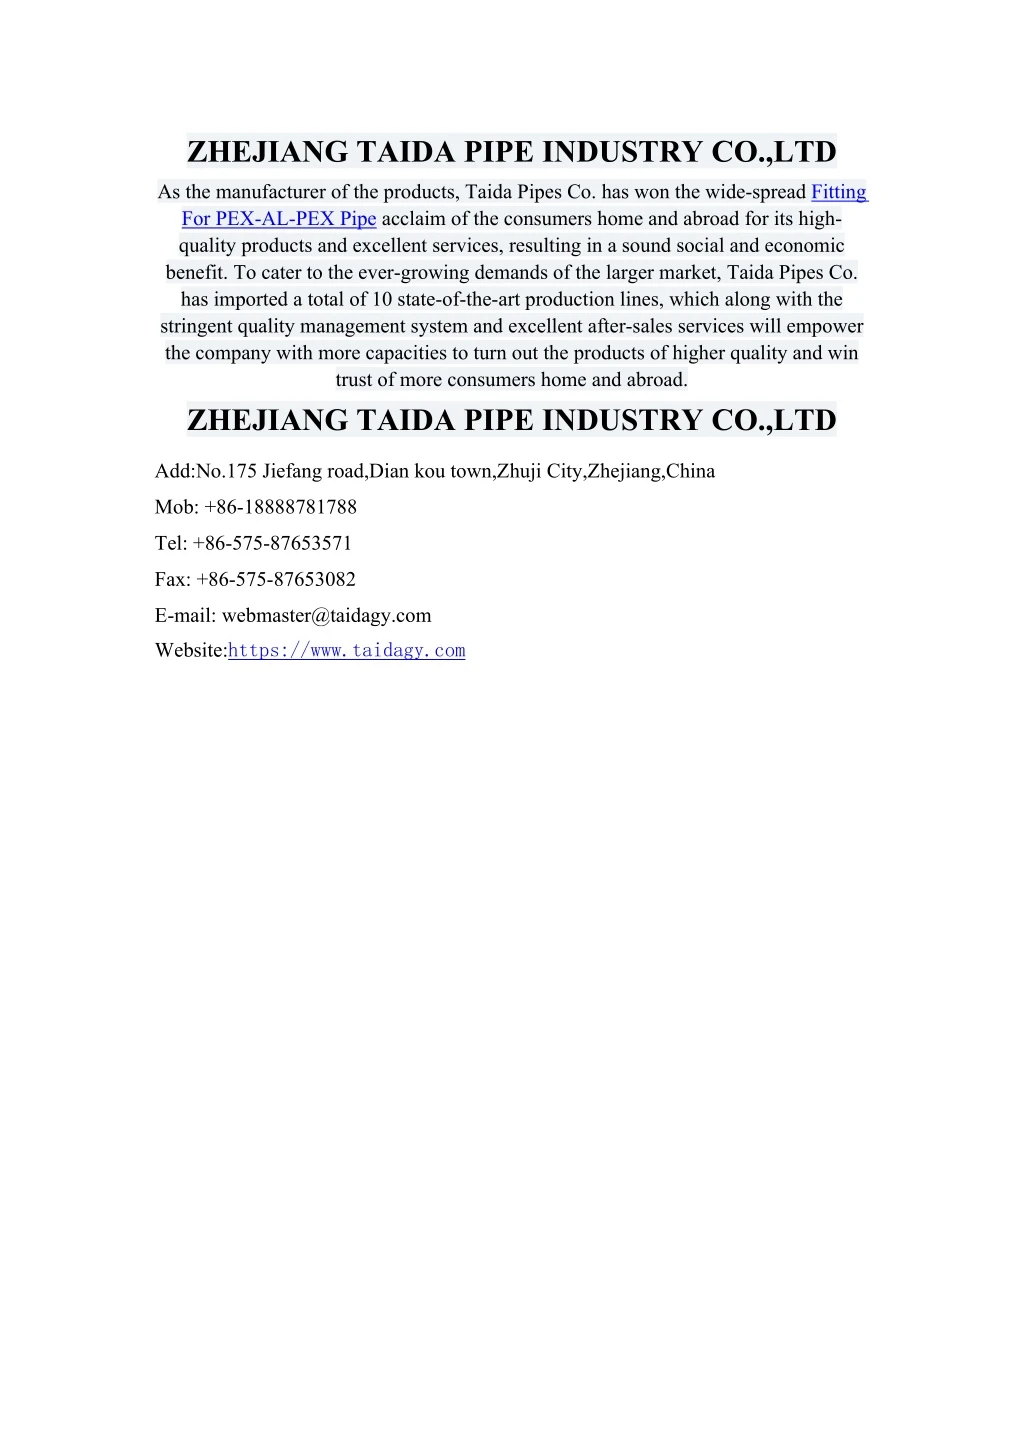 zhejiang taida pipe industry co ltd